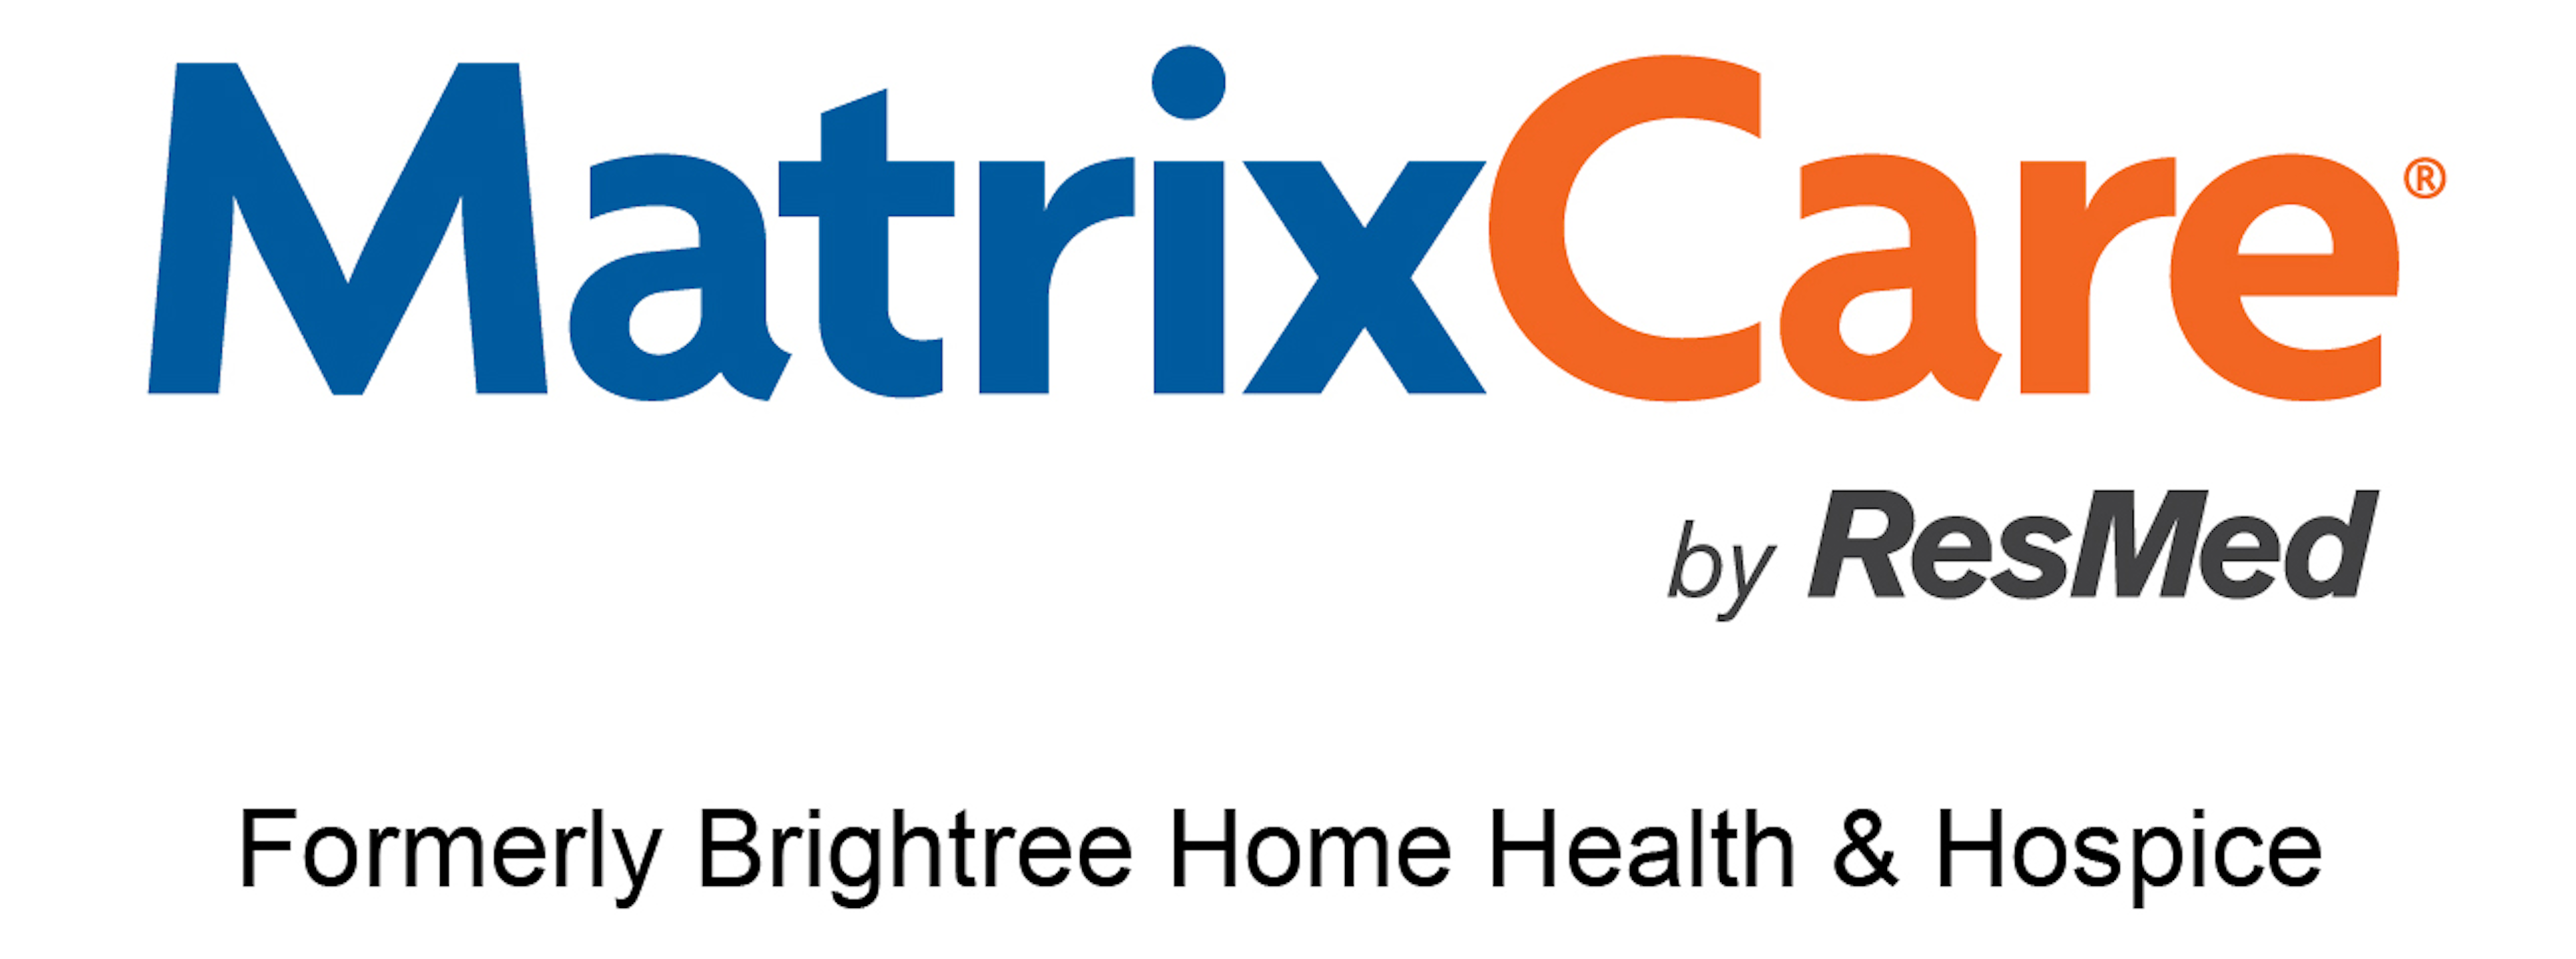 MatrixCare Home Health & Hospice Logo